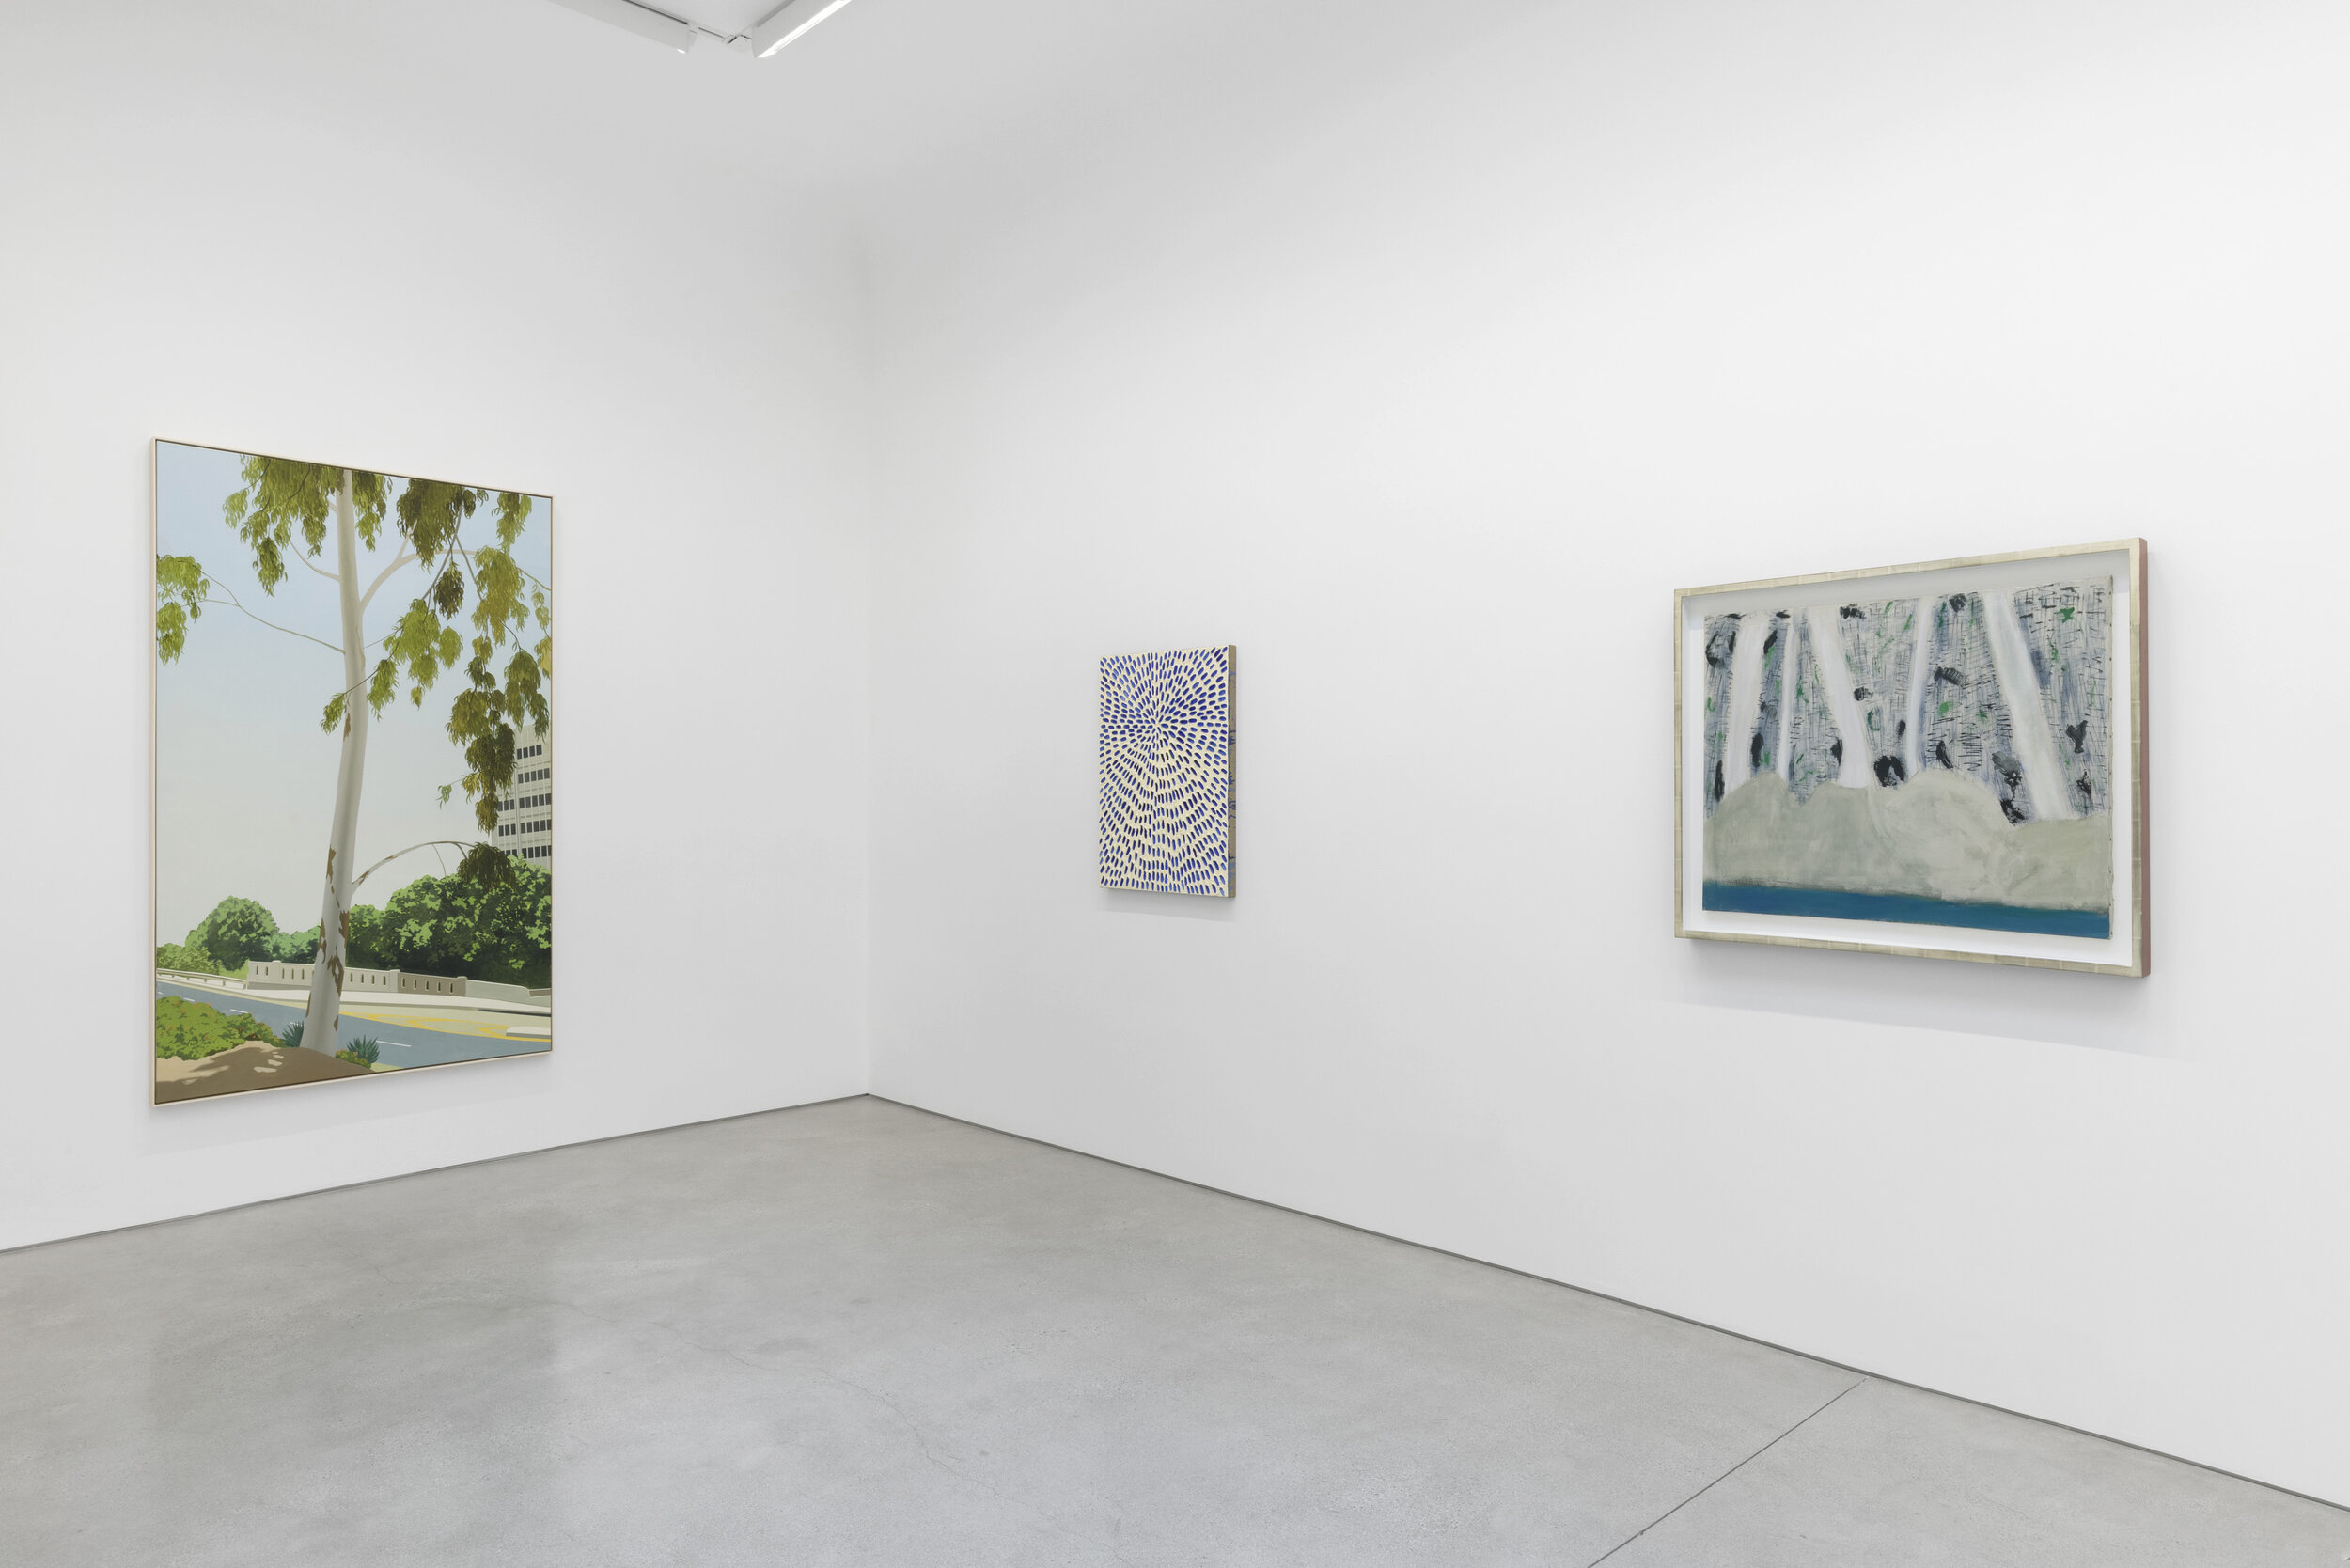   The Beatitudes of Malibu   (installation view)                                             David Kordansky Gallery, Los Angeles CA 